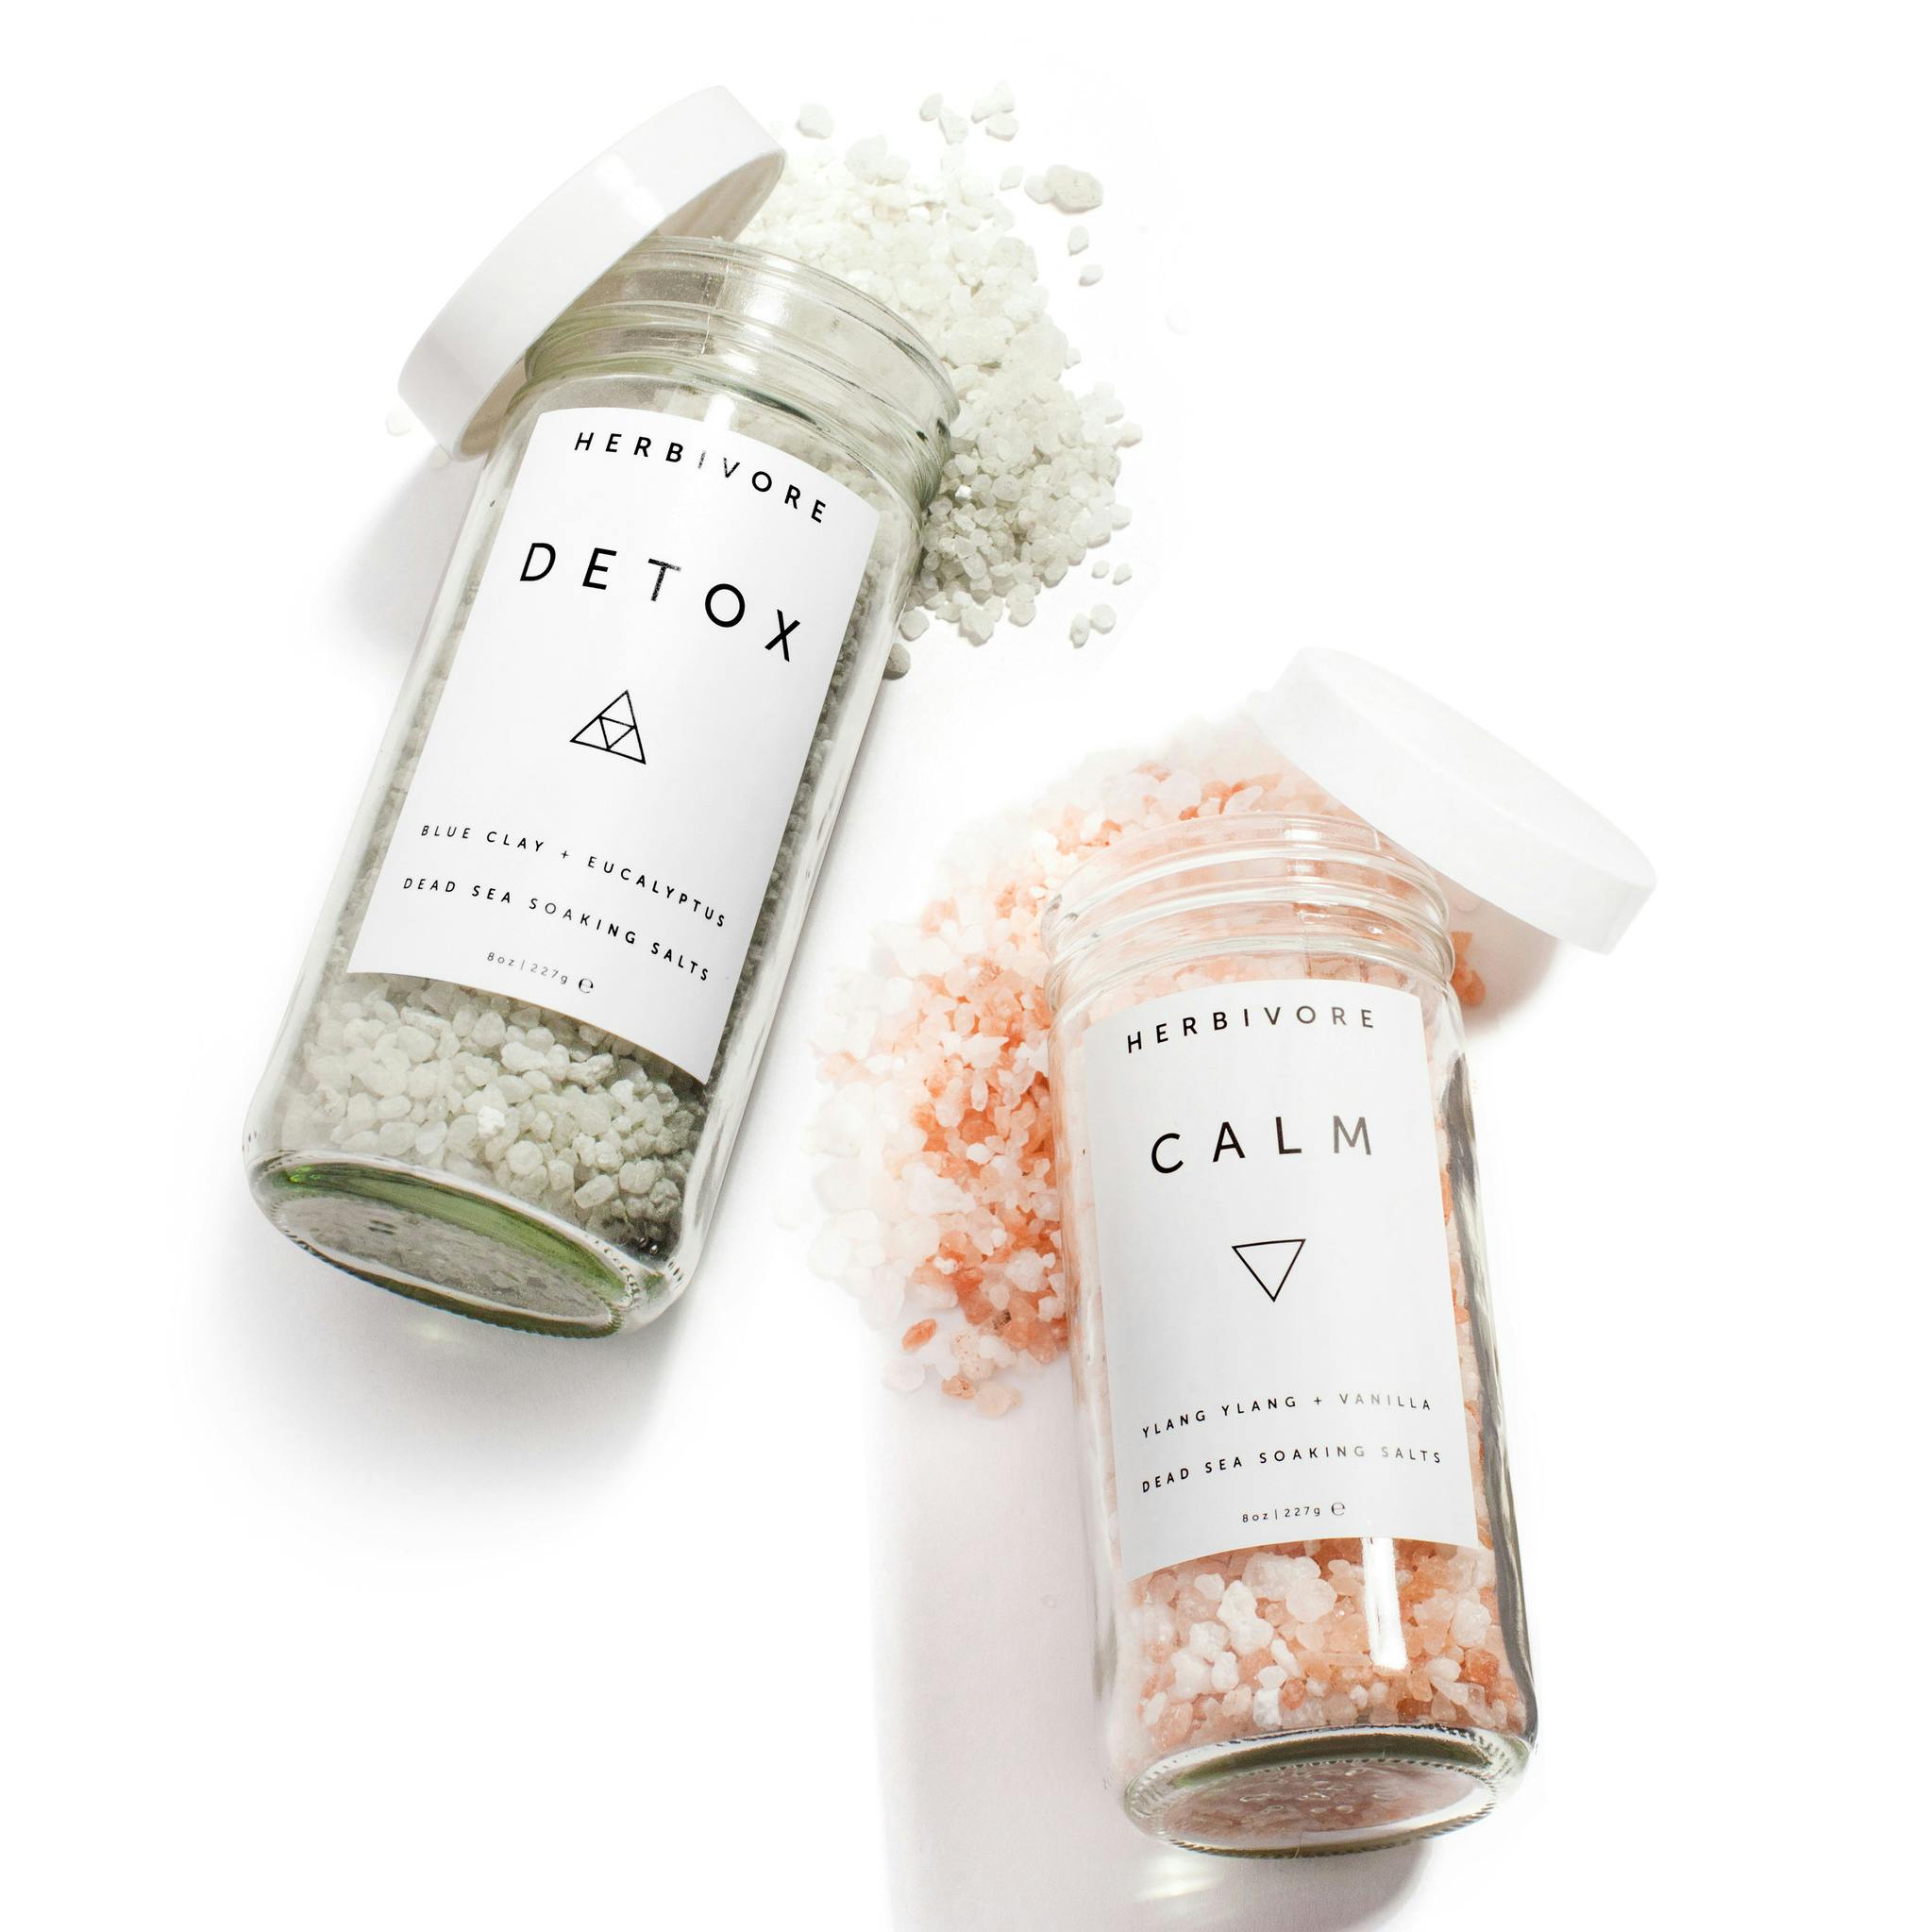 Herbivore Calm + Detox Bath Salts Kit (8oz)